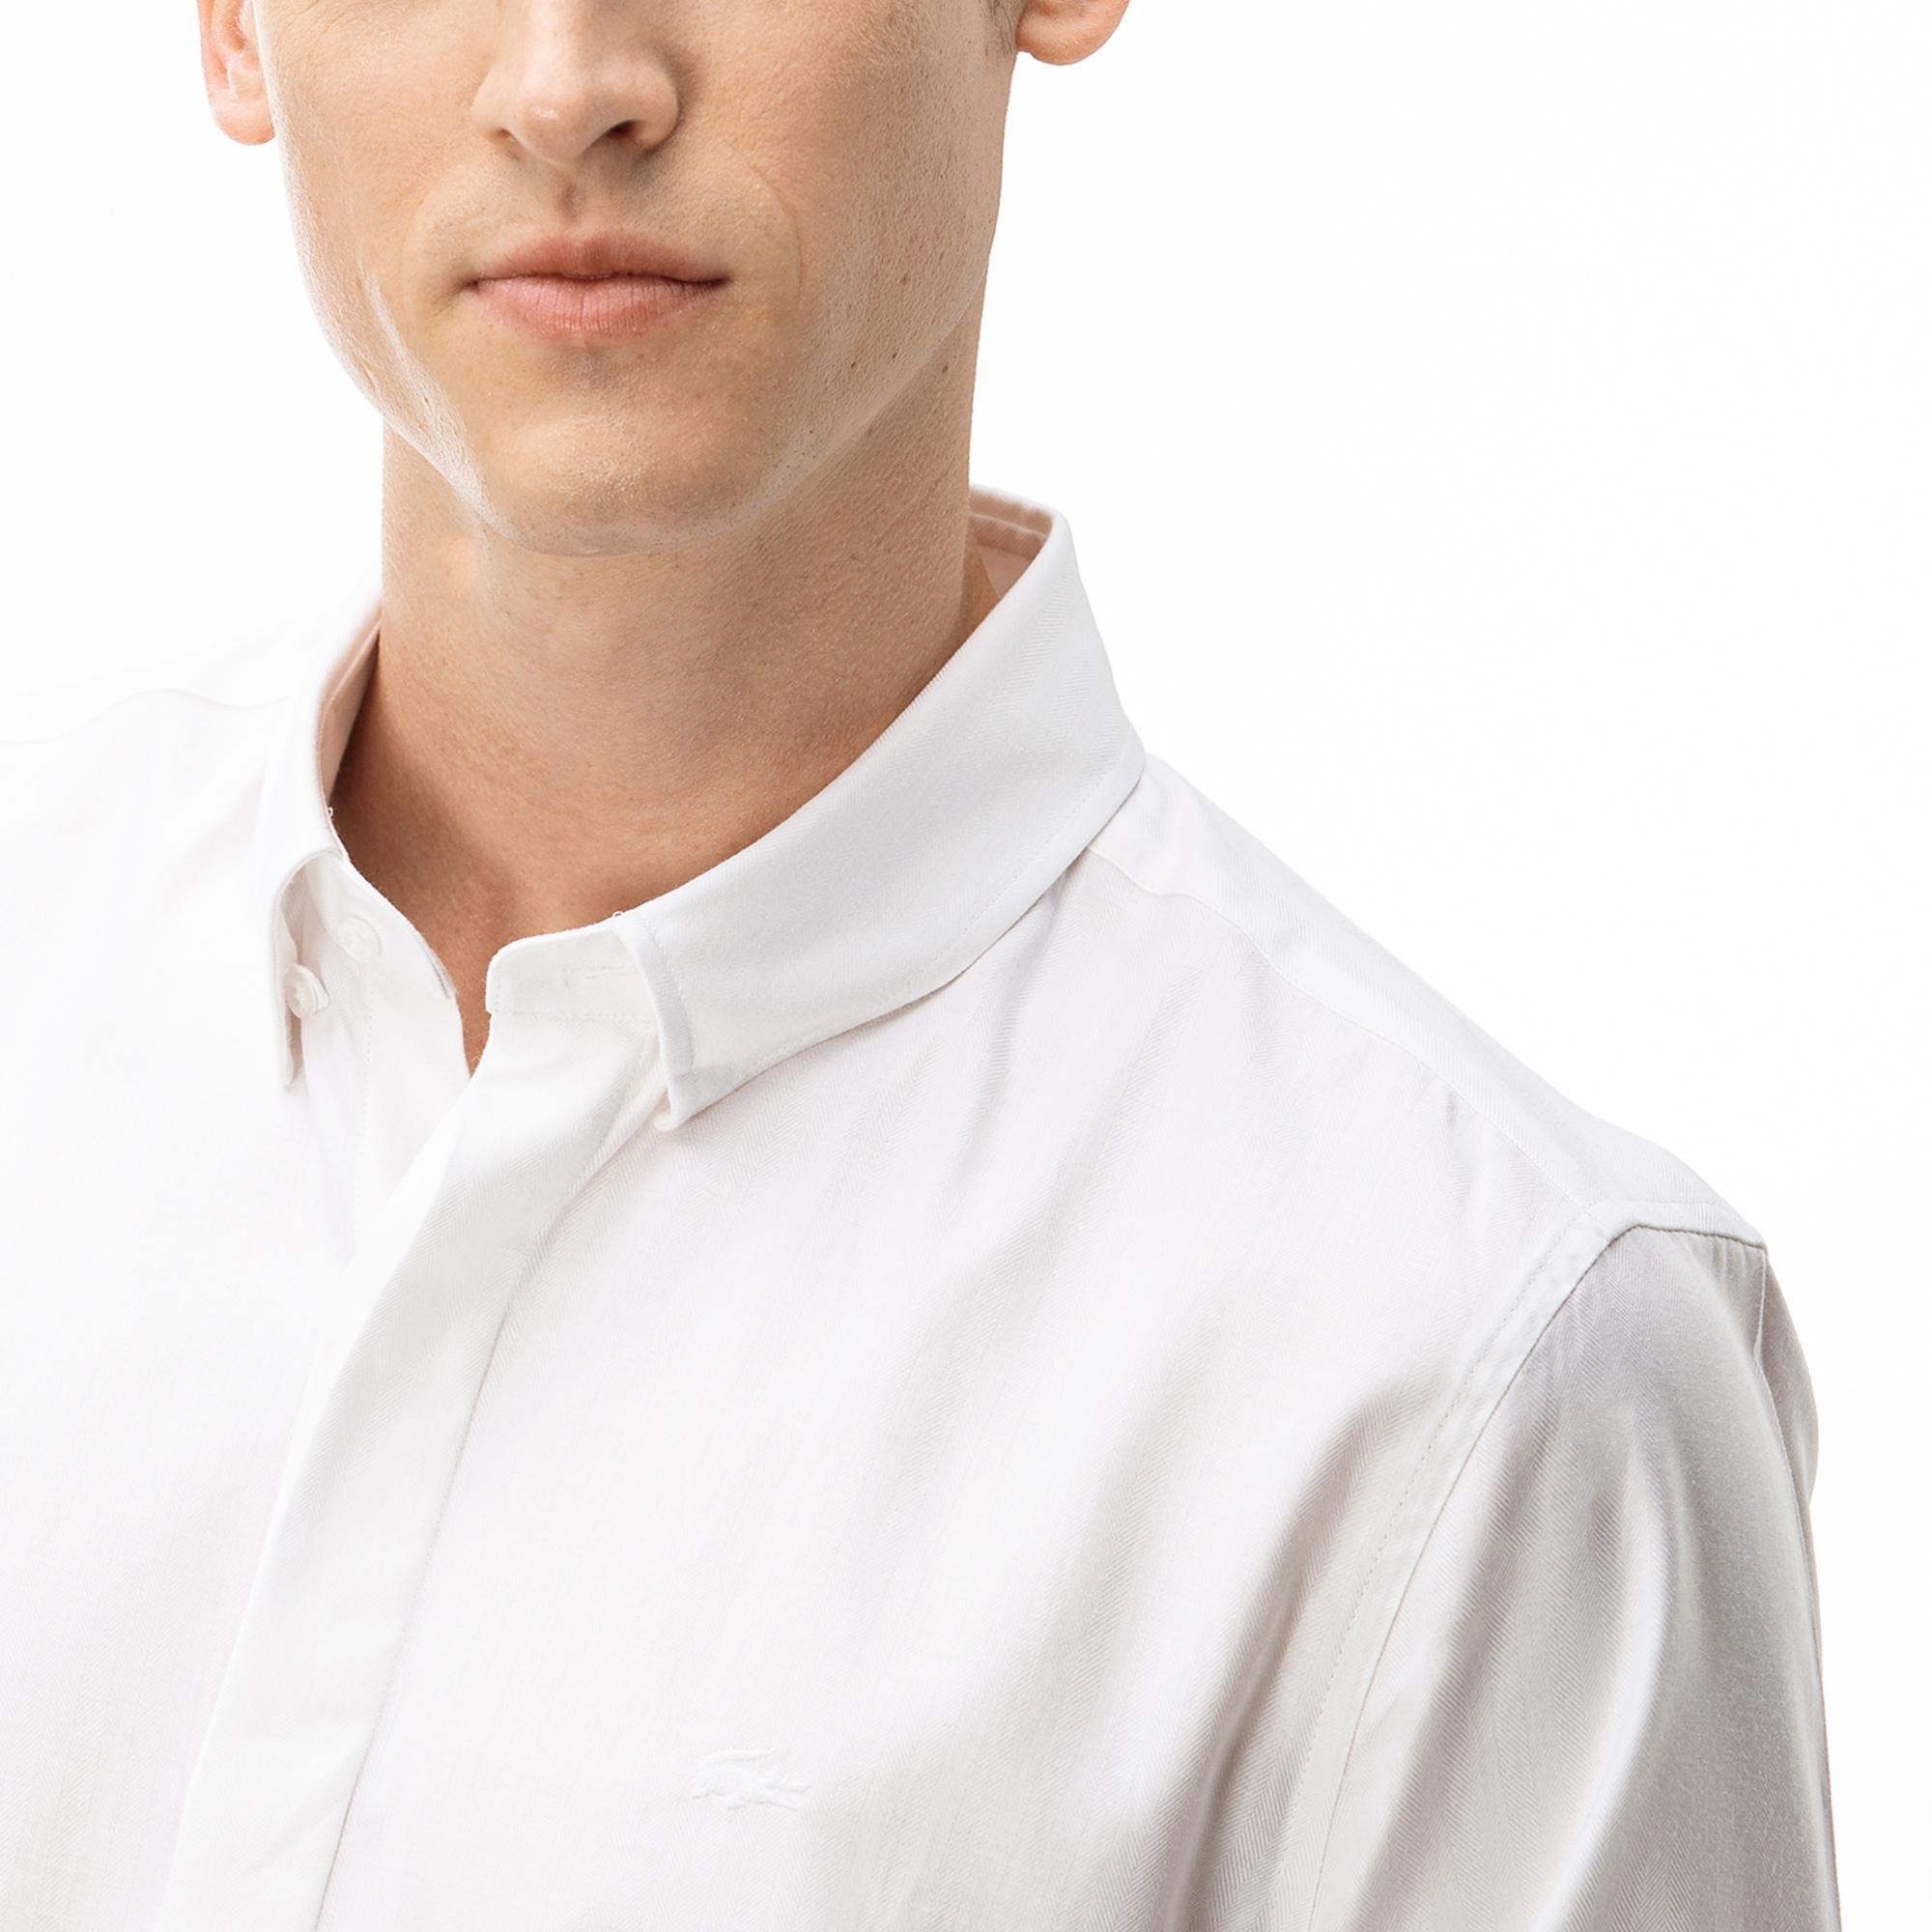 Lacoste Men's Long Sleeve Woven Shirt